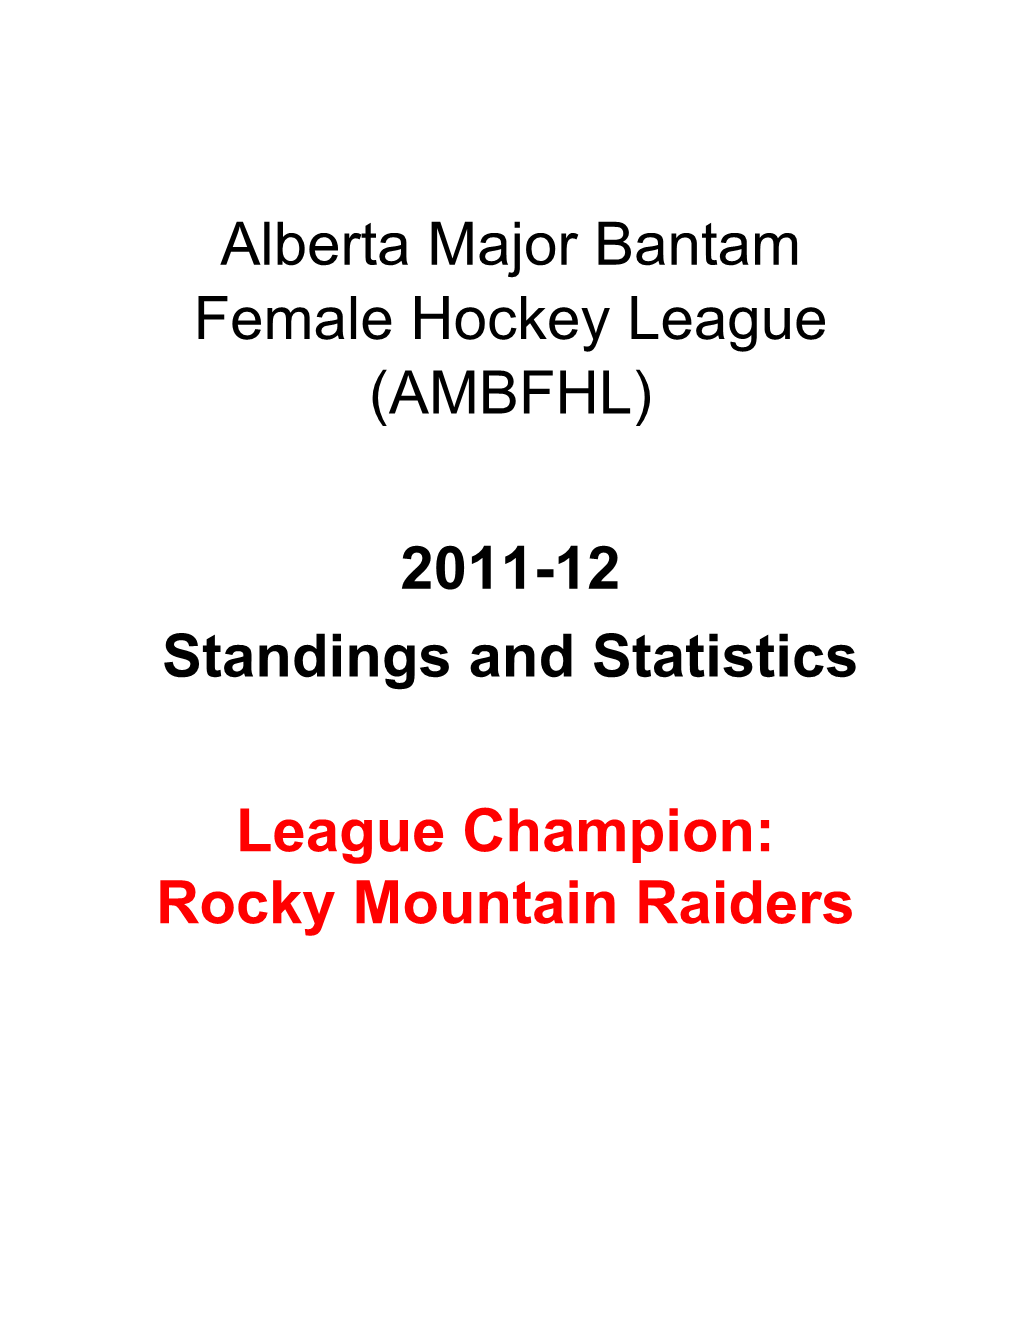 Alberta Major Bantam Female Hockey League (AMBFHL) 2011-12